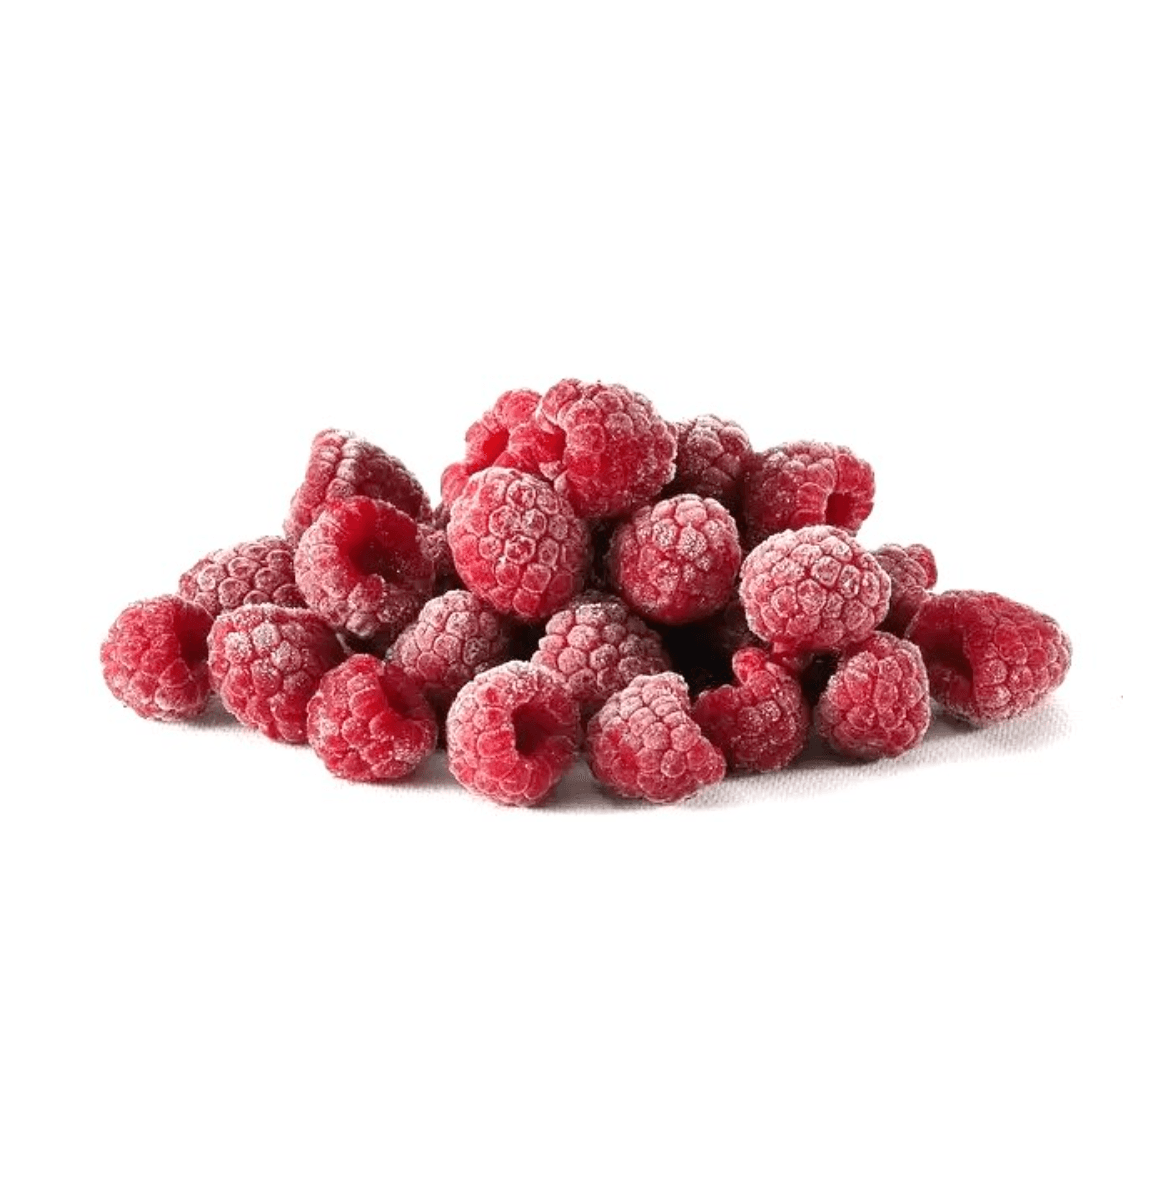 IQF Raspberry Whole - unitedbakerysupplies